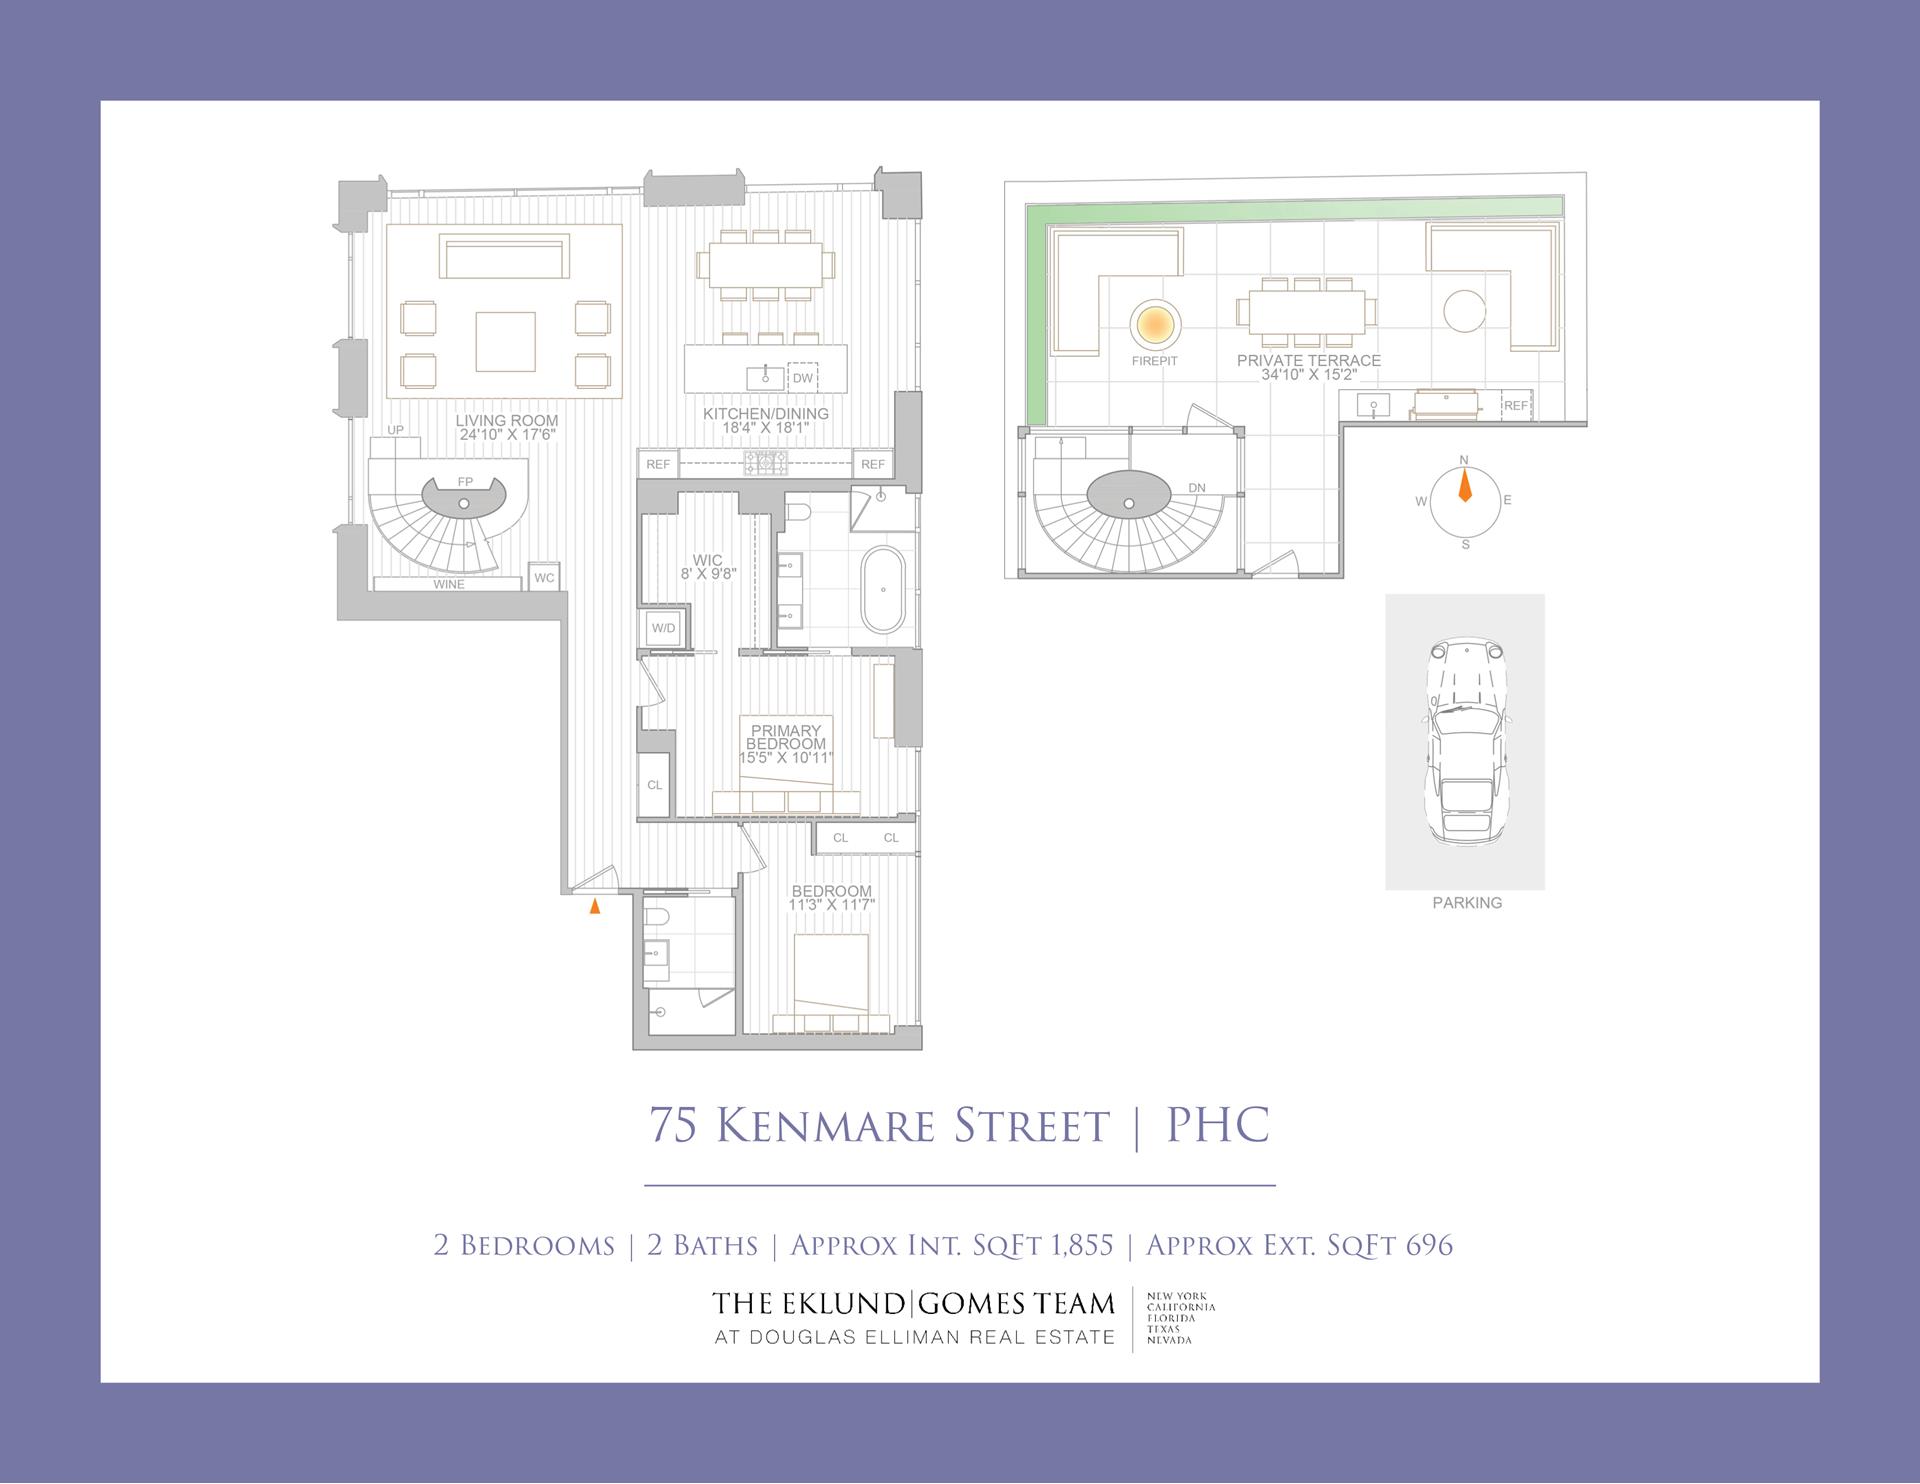 Floorplan for 75 Kenmare Street, PHC